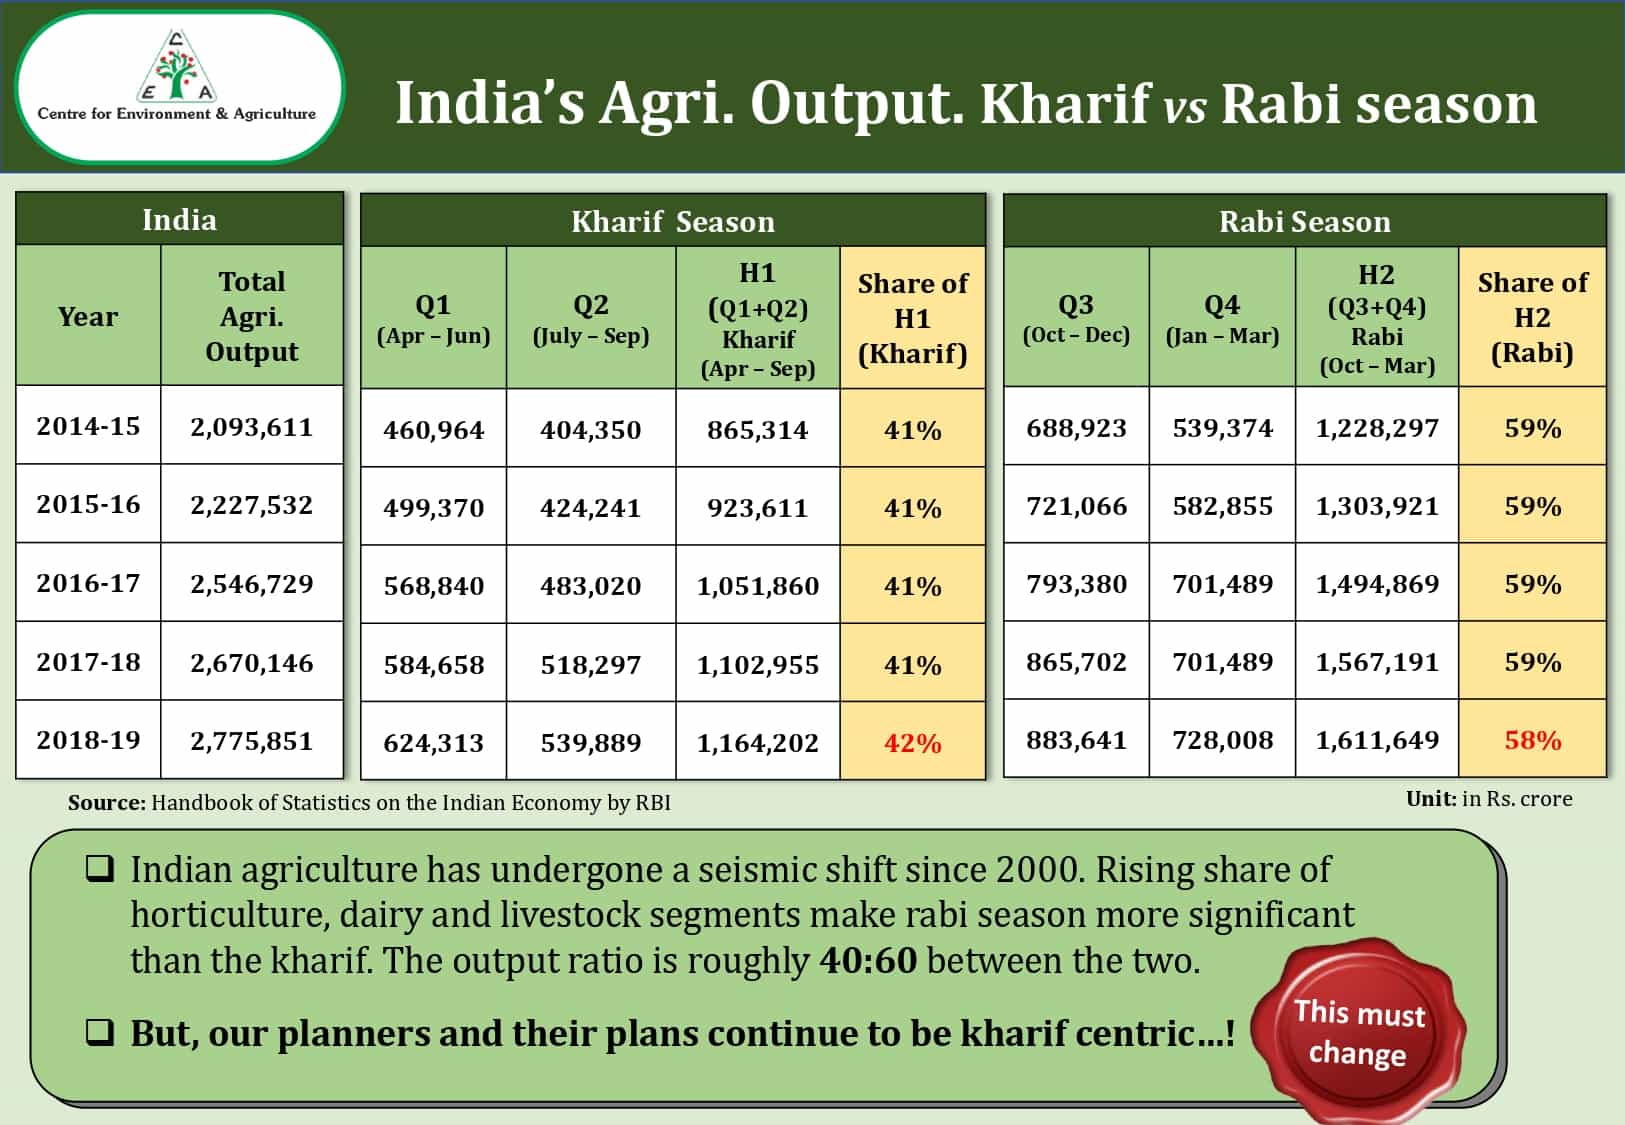 India's Agri. output - Kharif vs Rabi